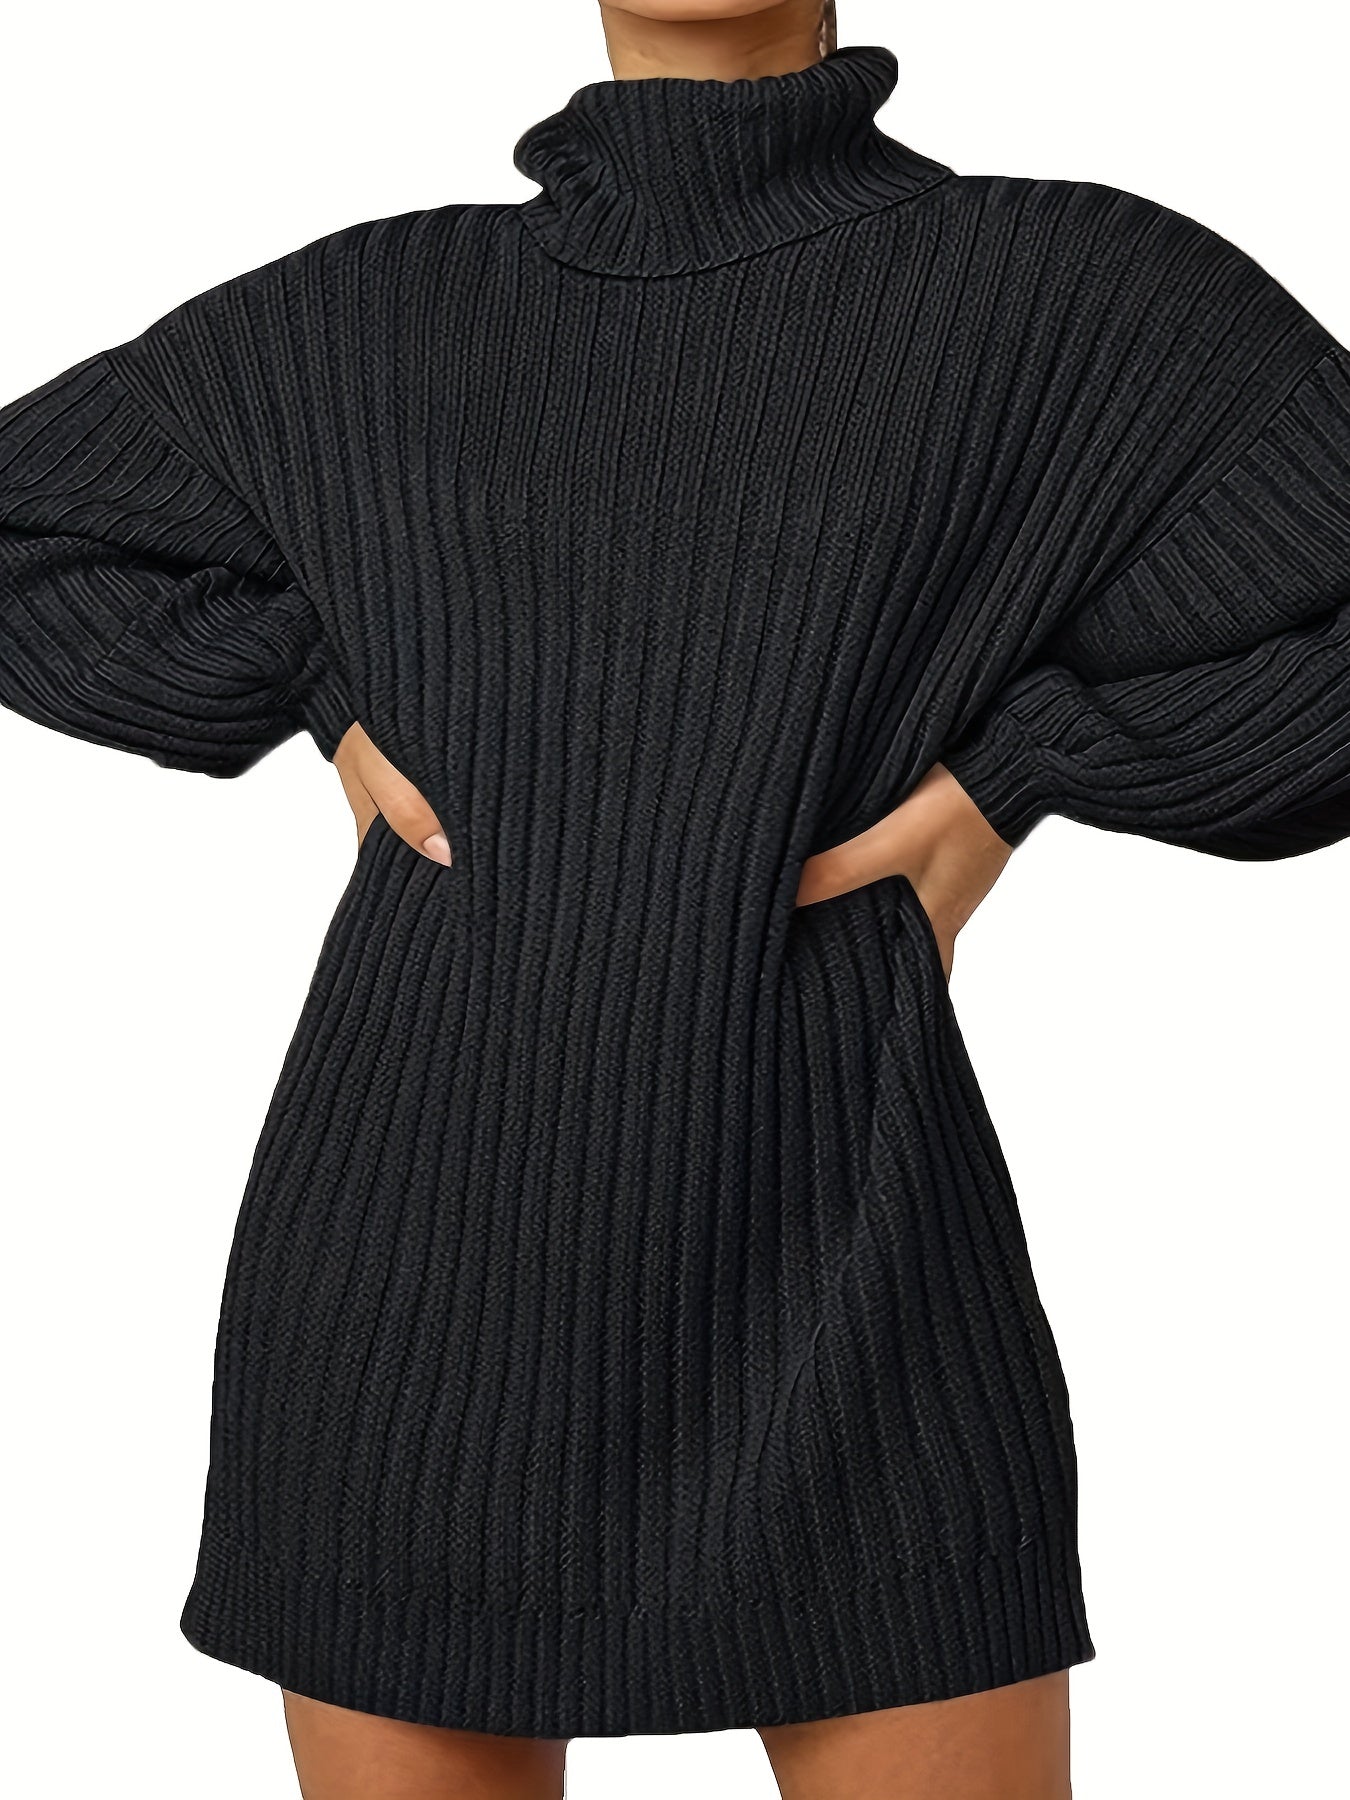 Antmvs Plus Size Casual Sweater Dress, Women's Plus Solid Long Sleeve Turtle Neck Mini Sweater Dress